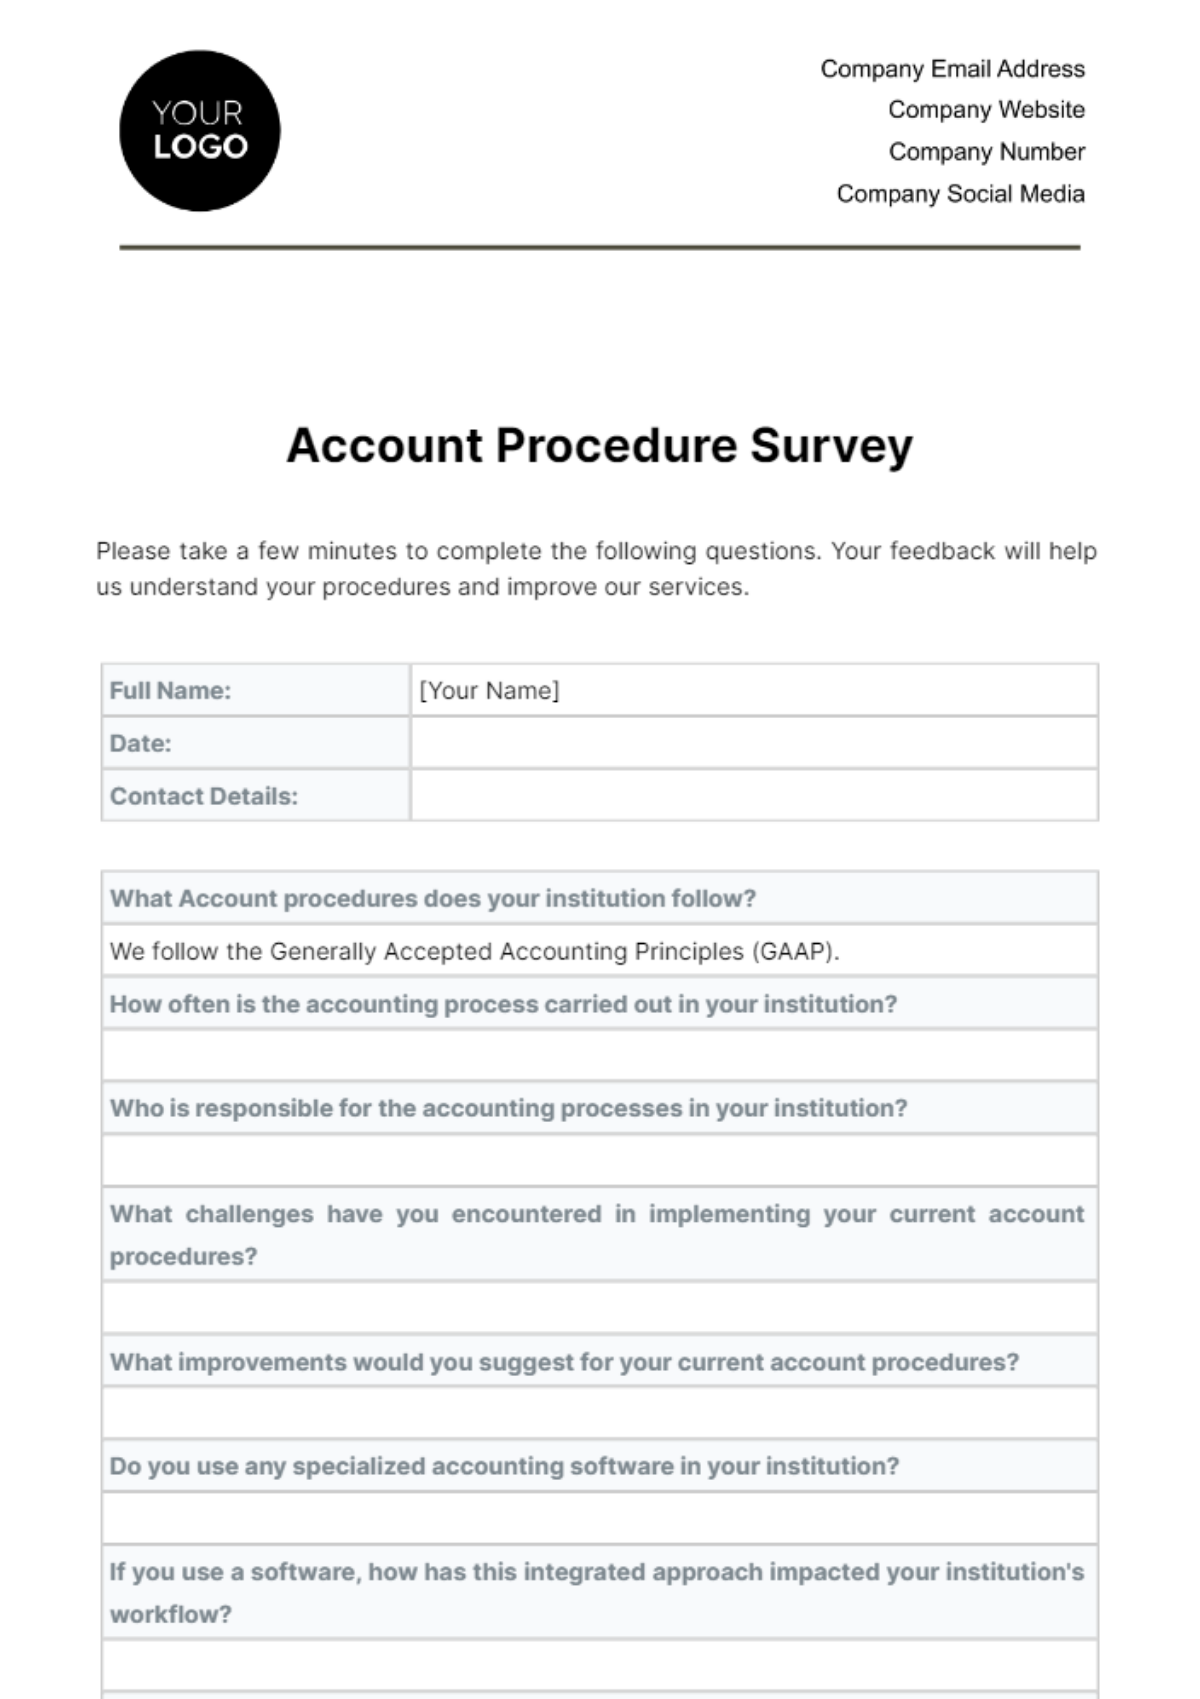 Account Procedure Survey Template